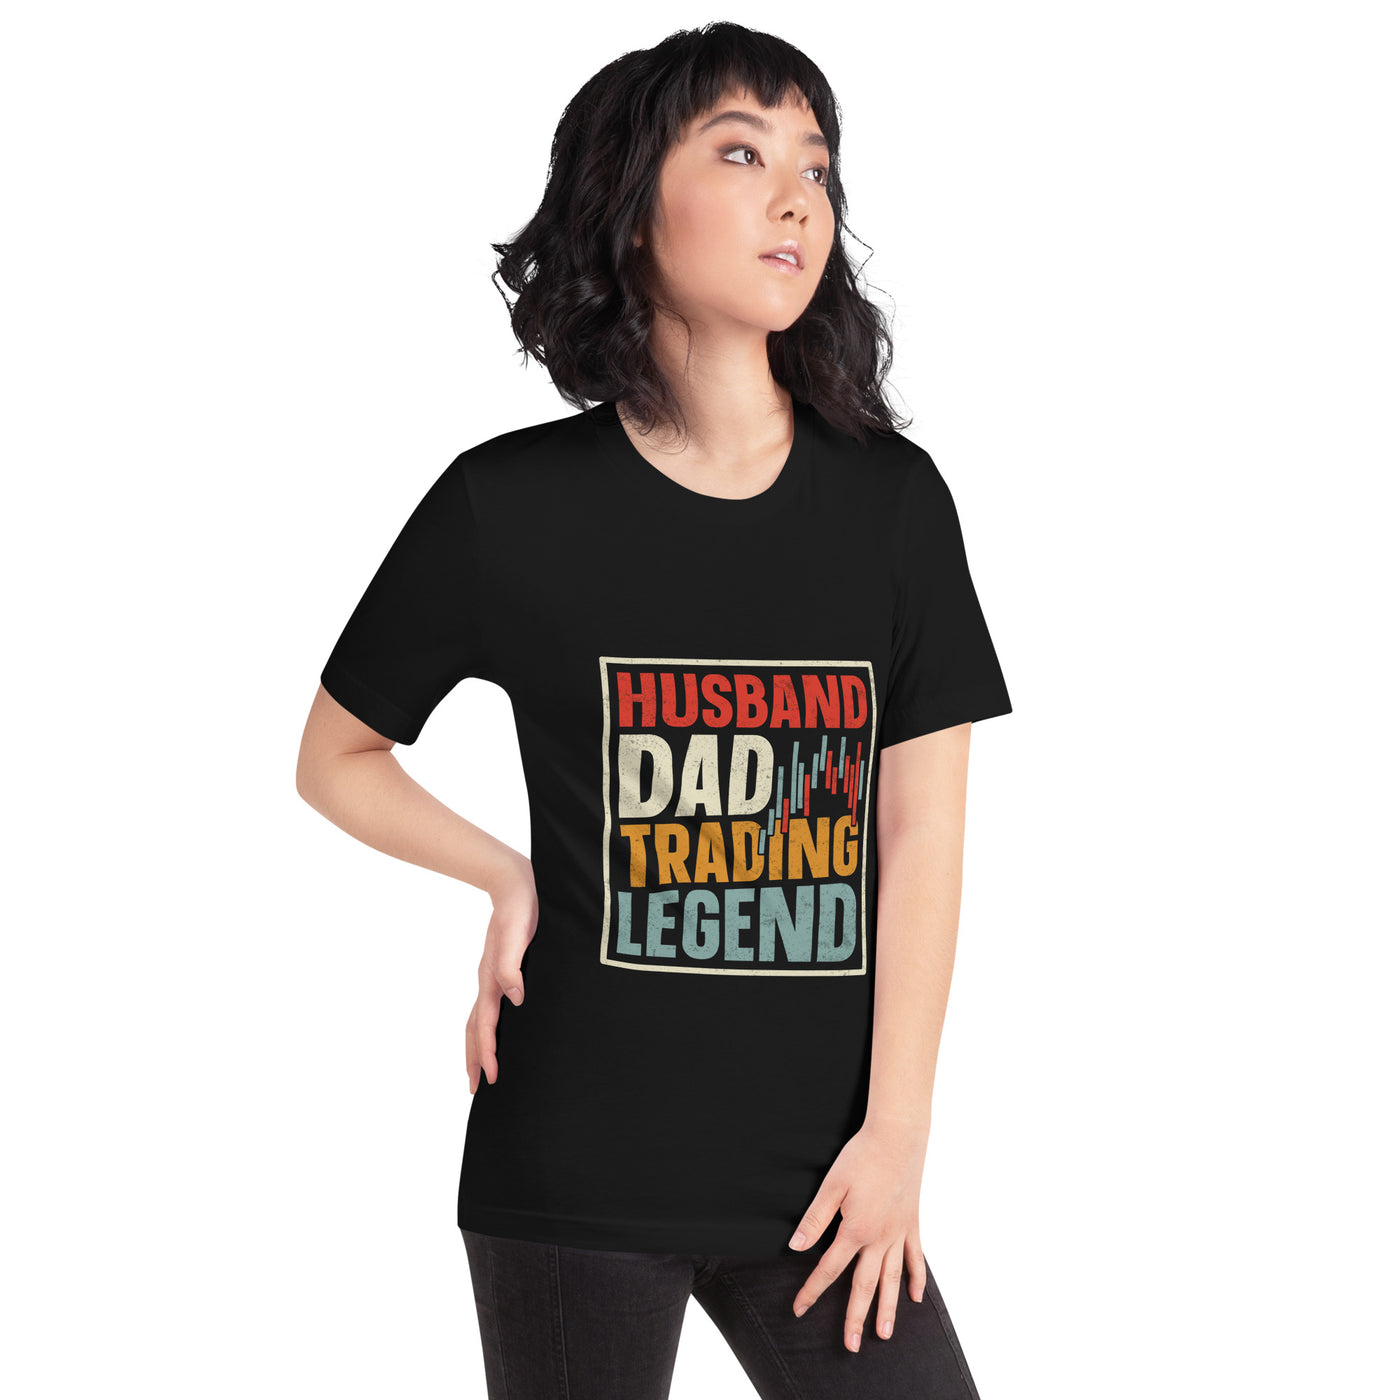 Husband, Dad, Trading Legend - Unisex t-shirt